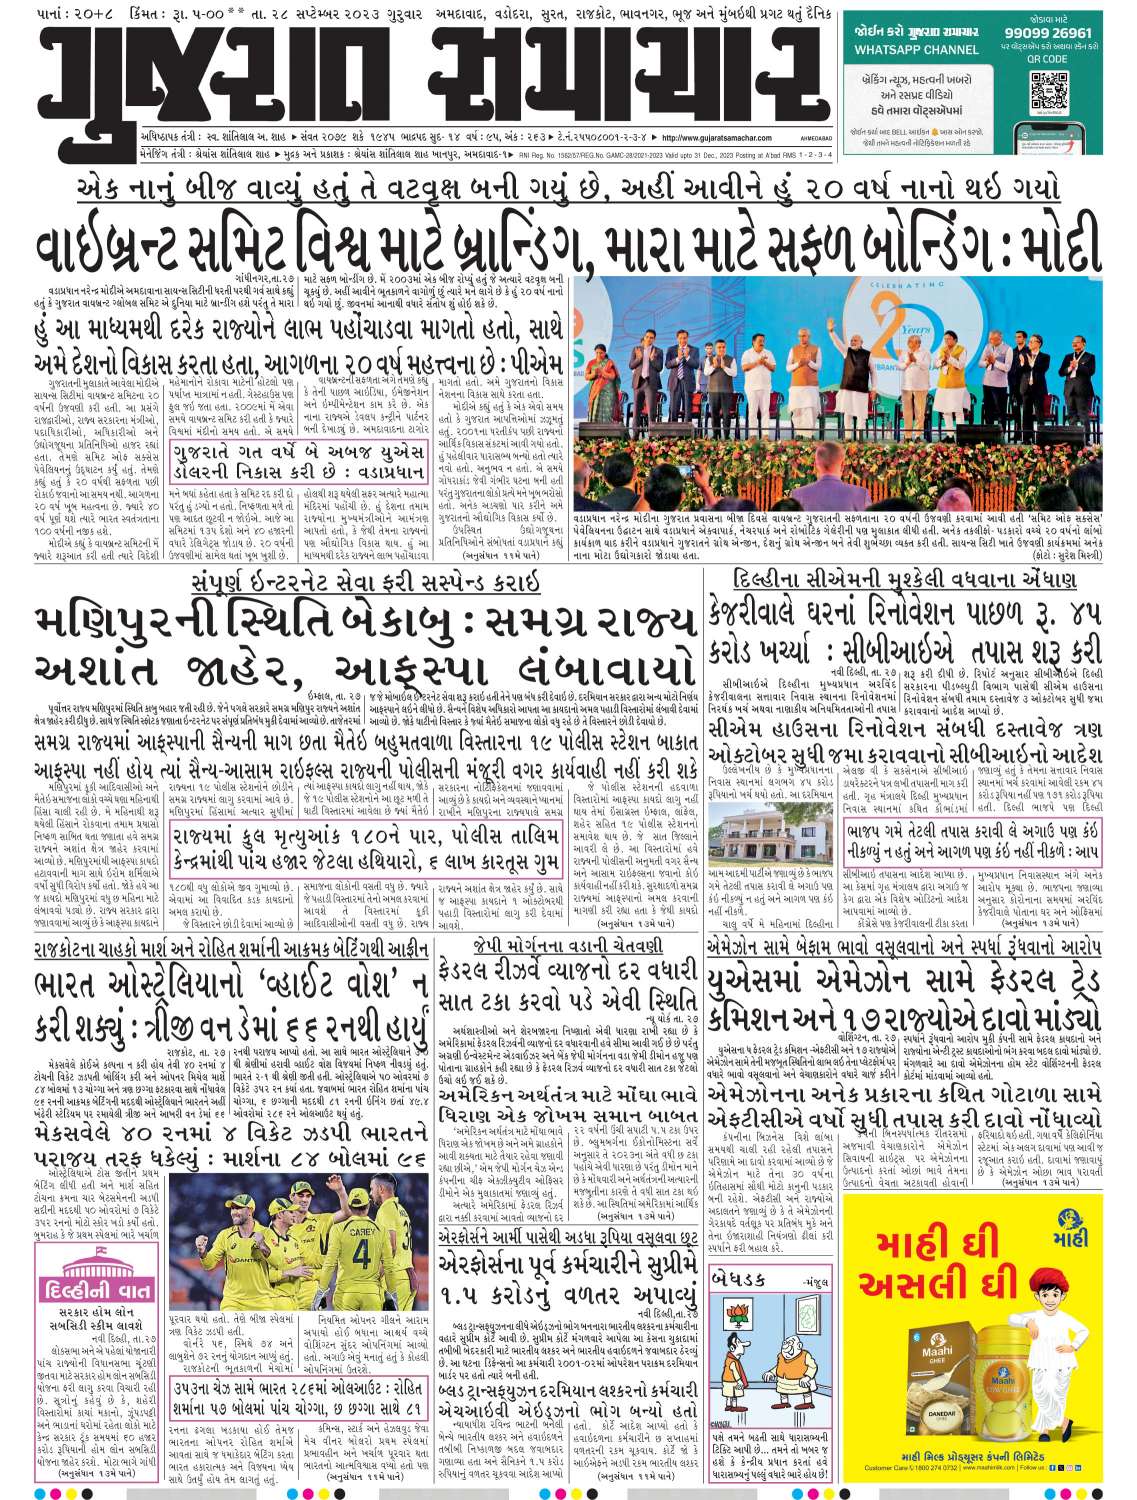 Watch Chhotaudepur News: Fake Government Office Scam Revealed | Gujarati  News | News18 Gujarati News On JioCinema